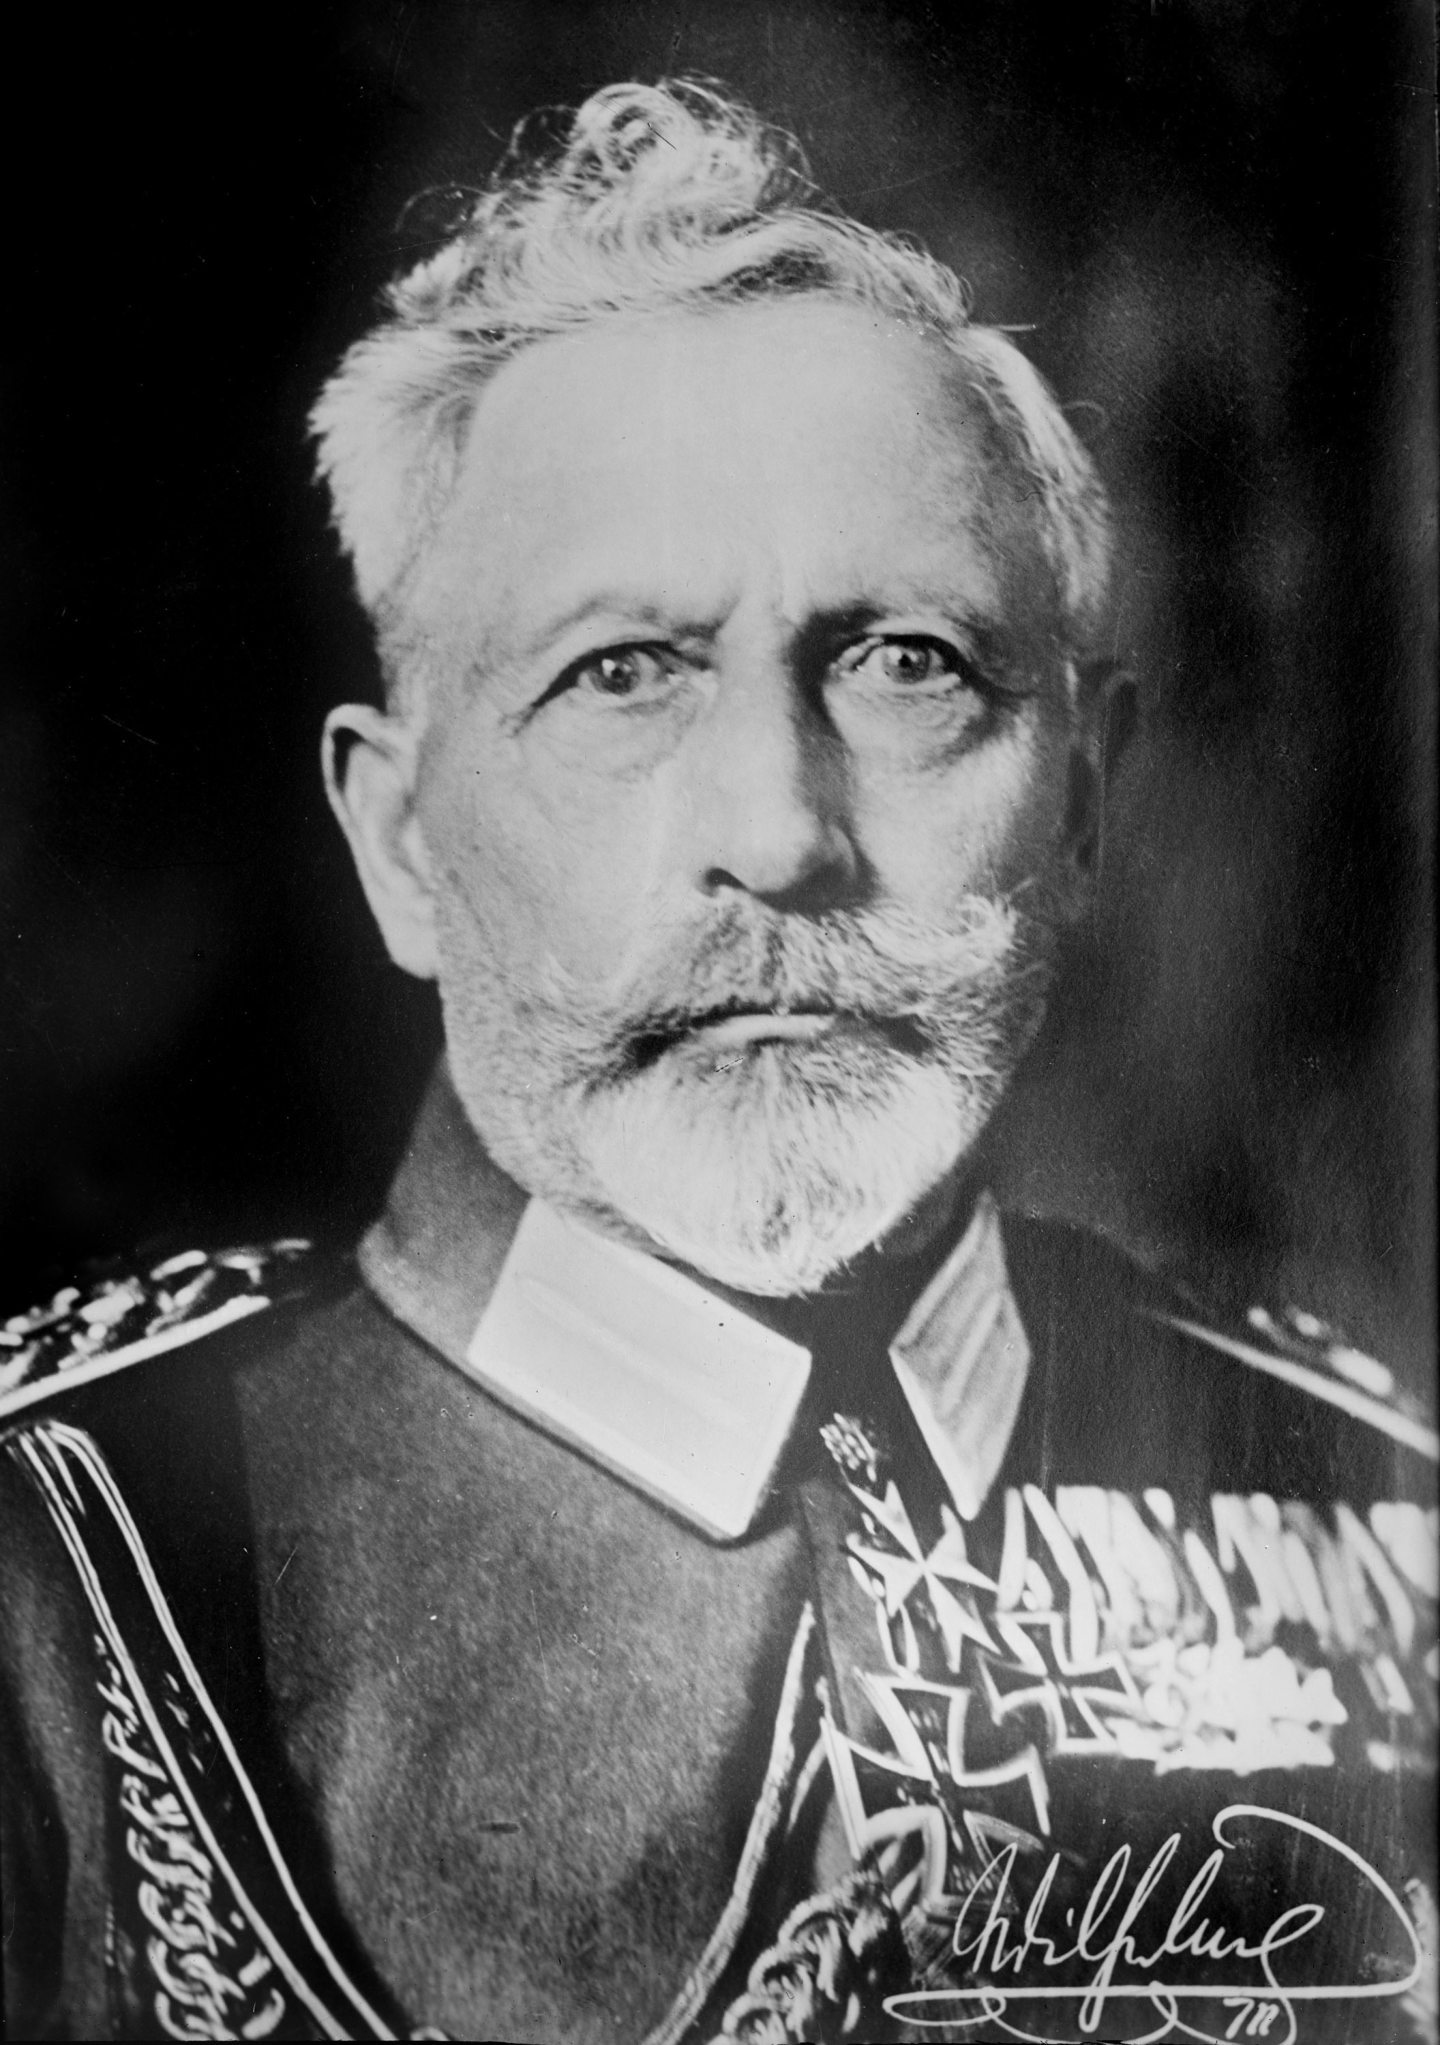 Kaiser Wilhelm II in the 1920s. Image: Shutterstock.